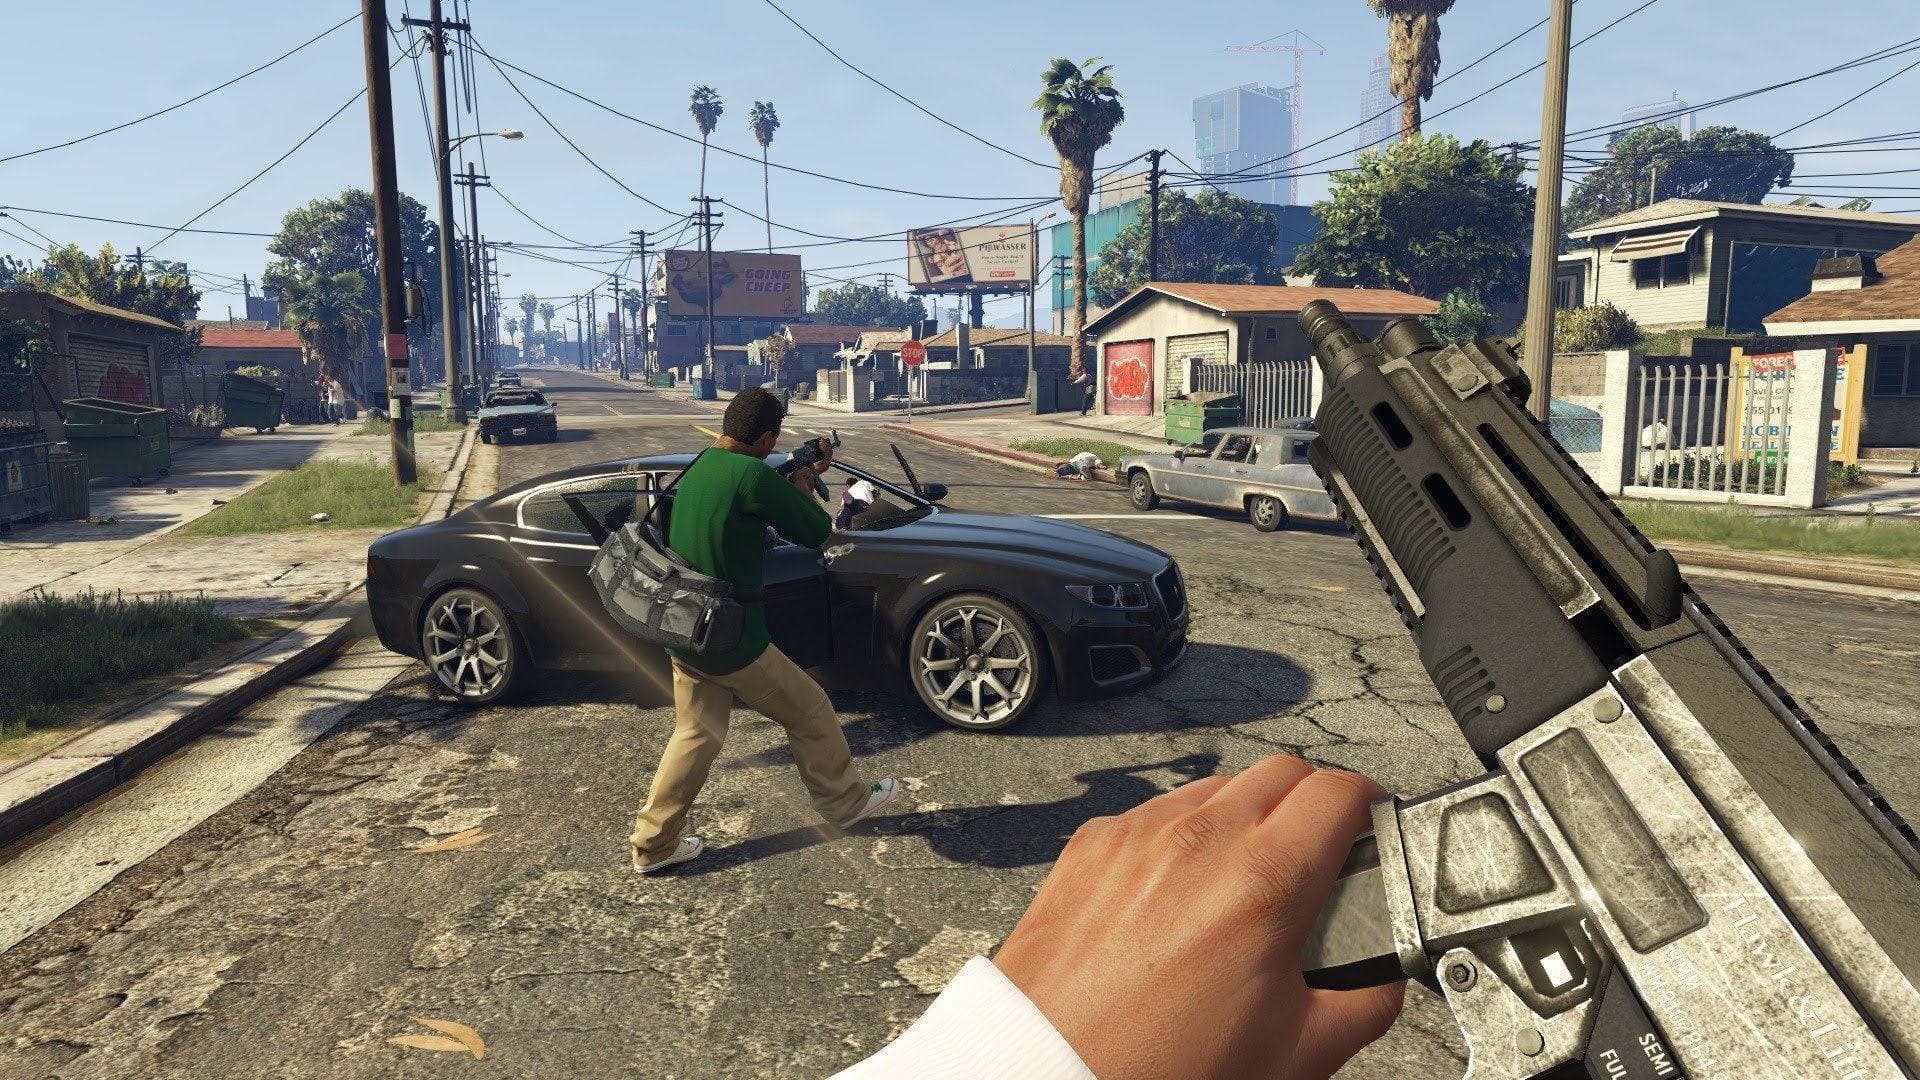 Grand Theft Auto V GTA 5 - Premium Online Edition - למחשב - EXON גיימס